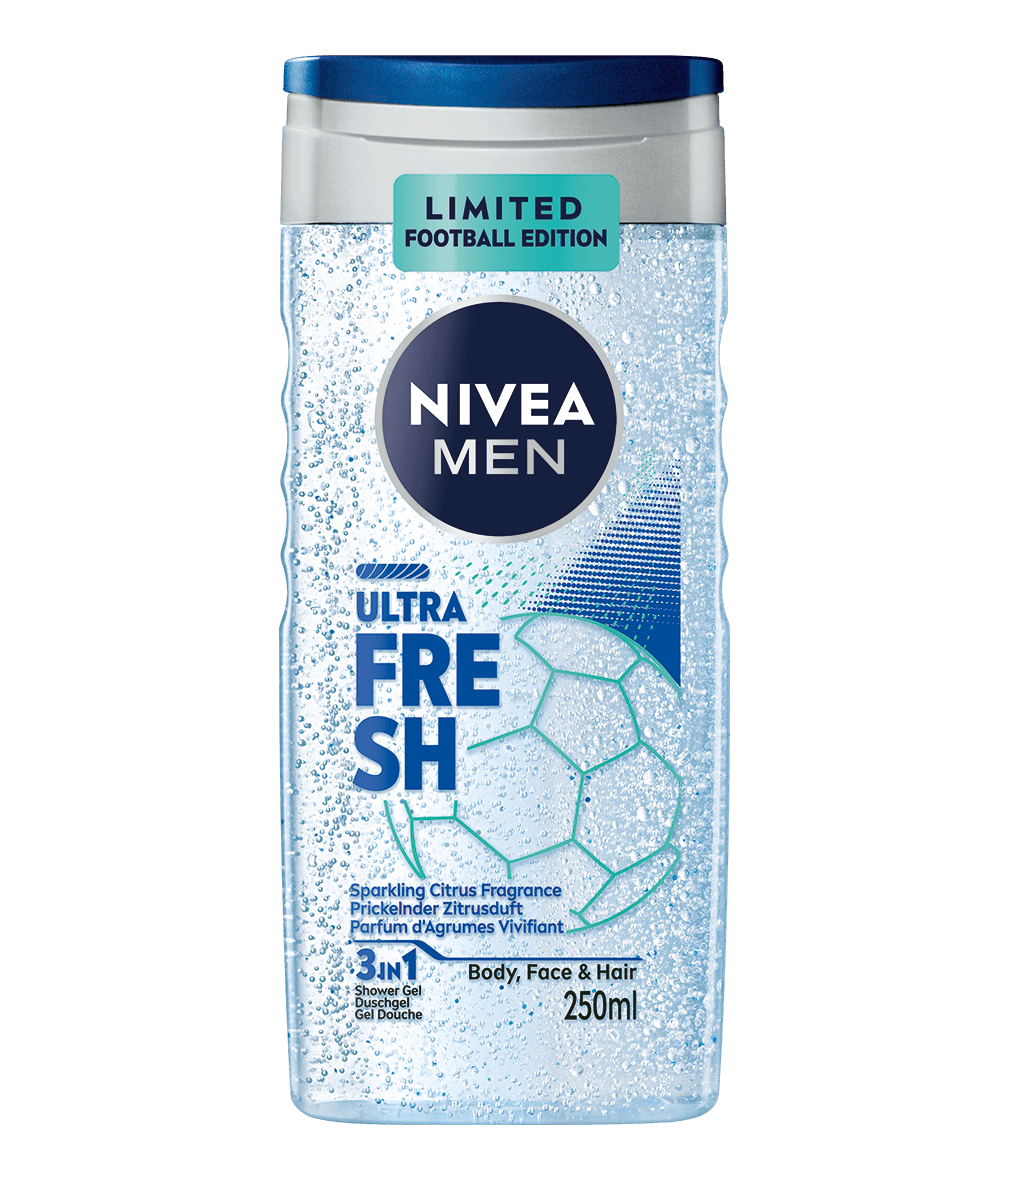 NIVEA MEN Ultra Fresh Limited Football Edition Shower Gel_250ml